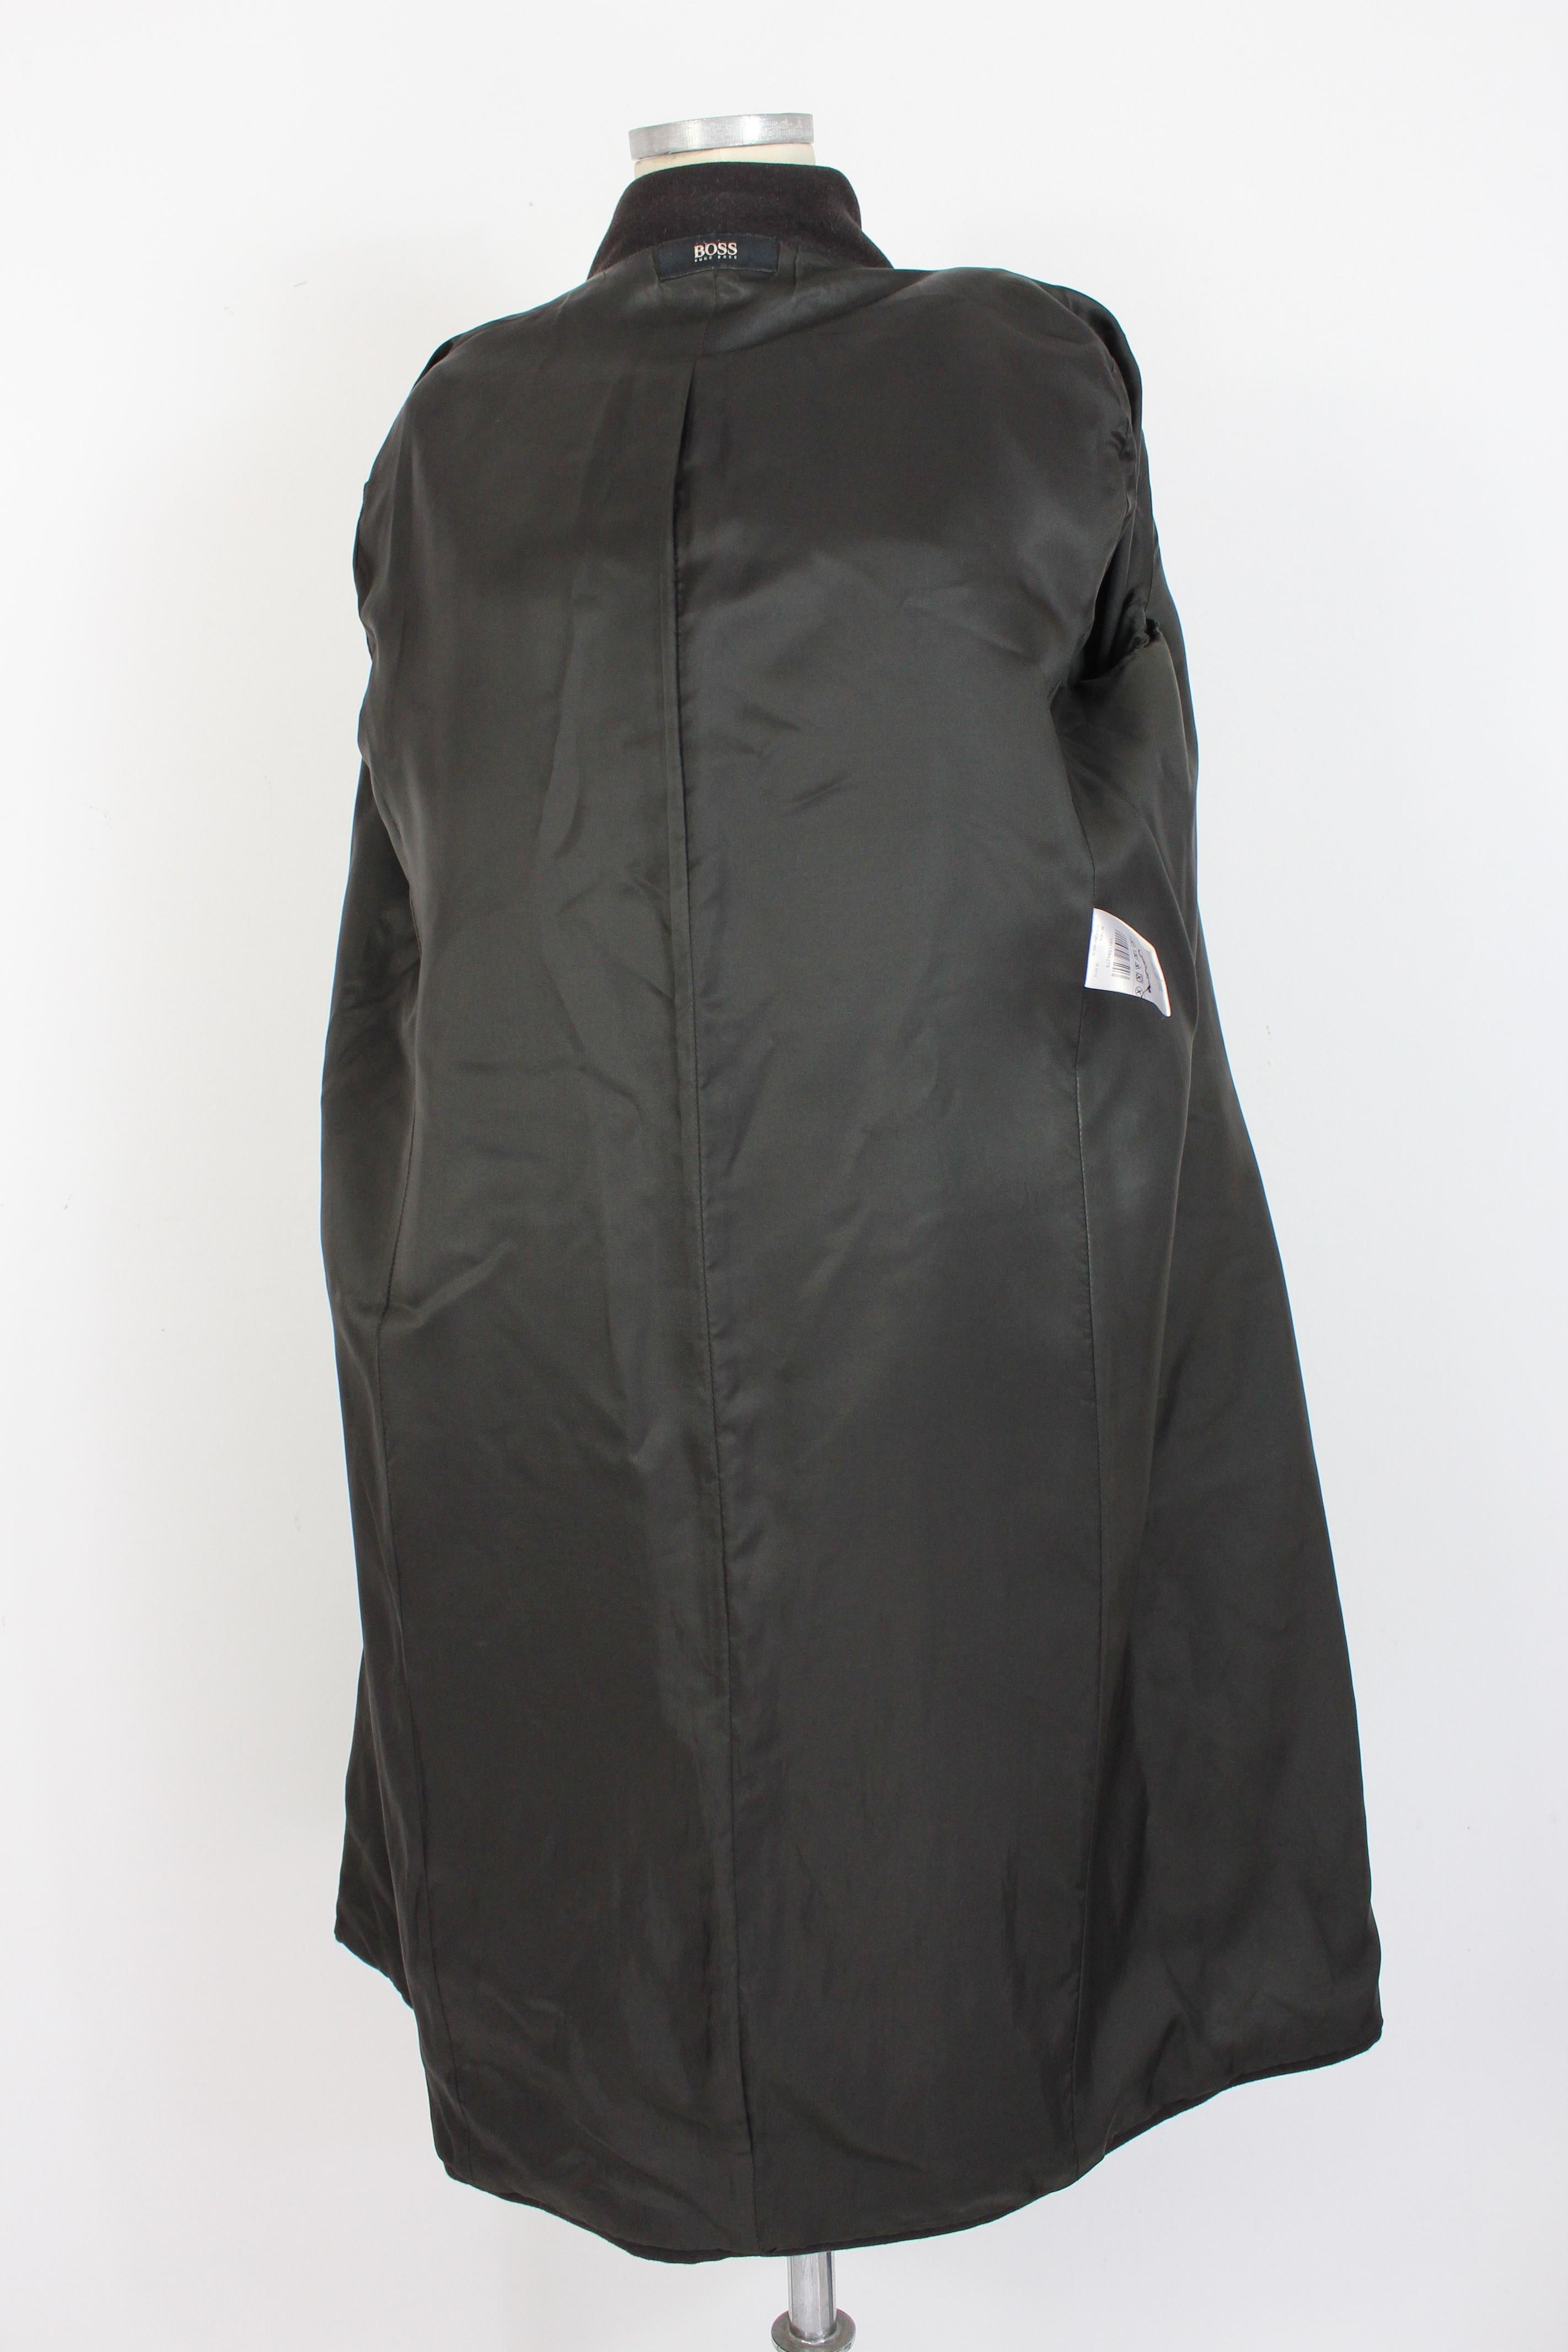 Hugo Boss Black Beige Cashmere Long Classic Coat 2